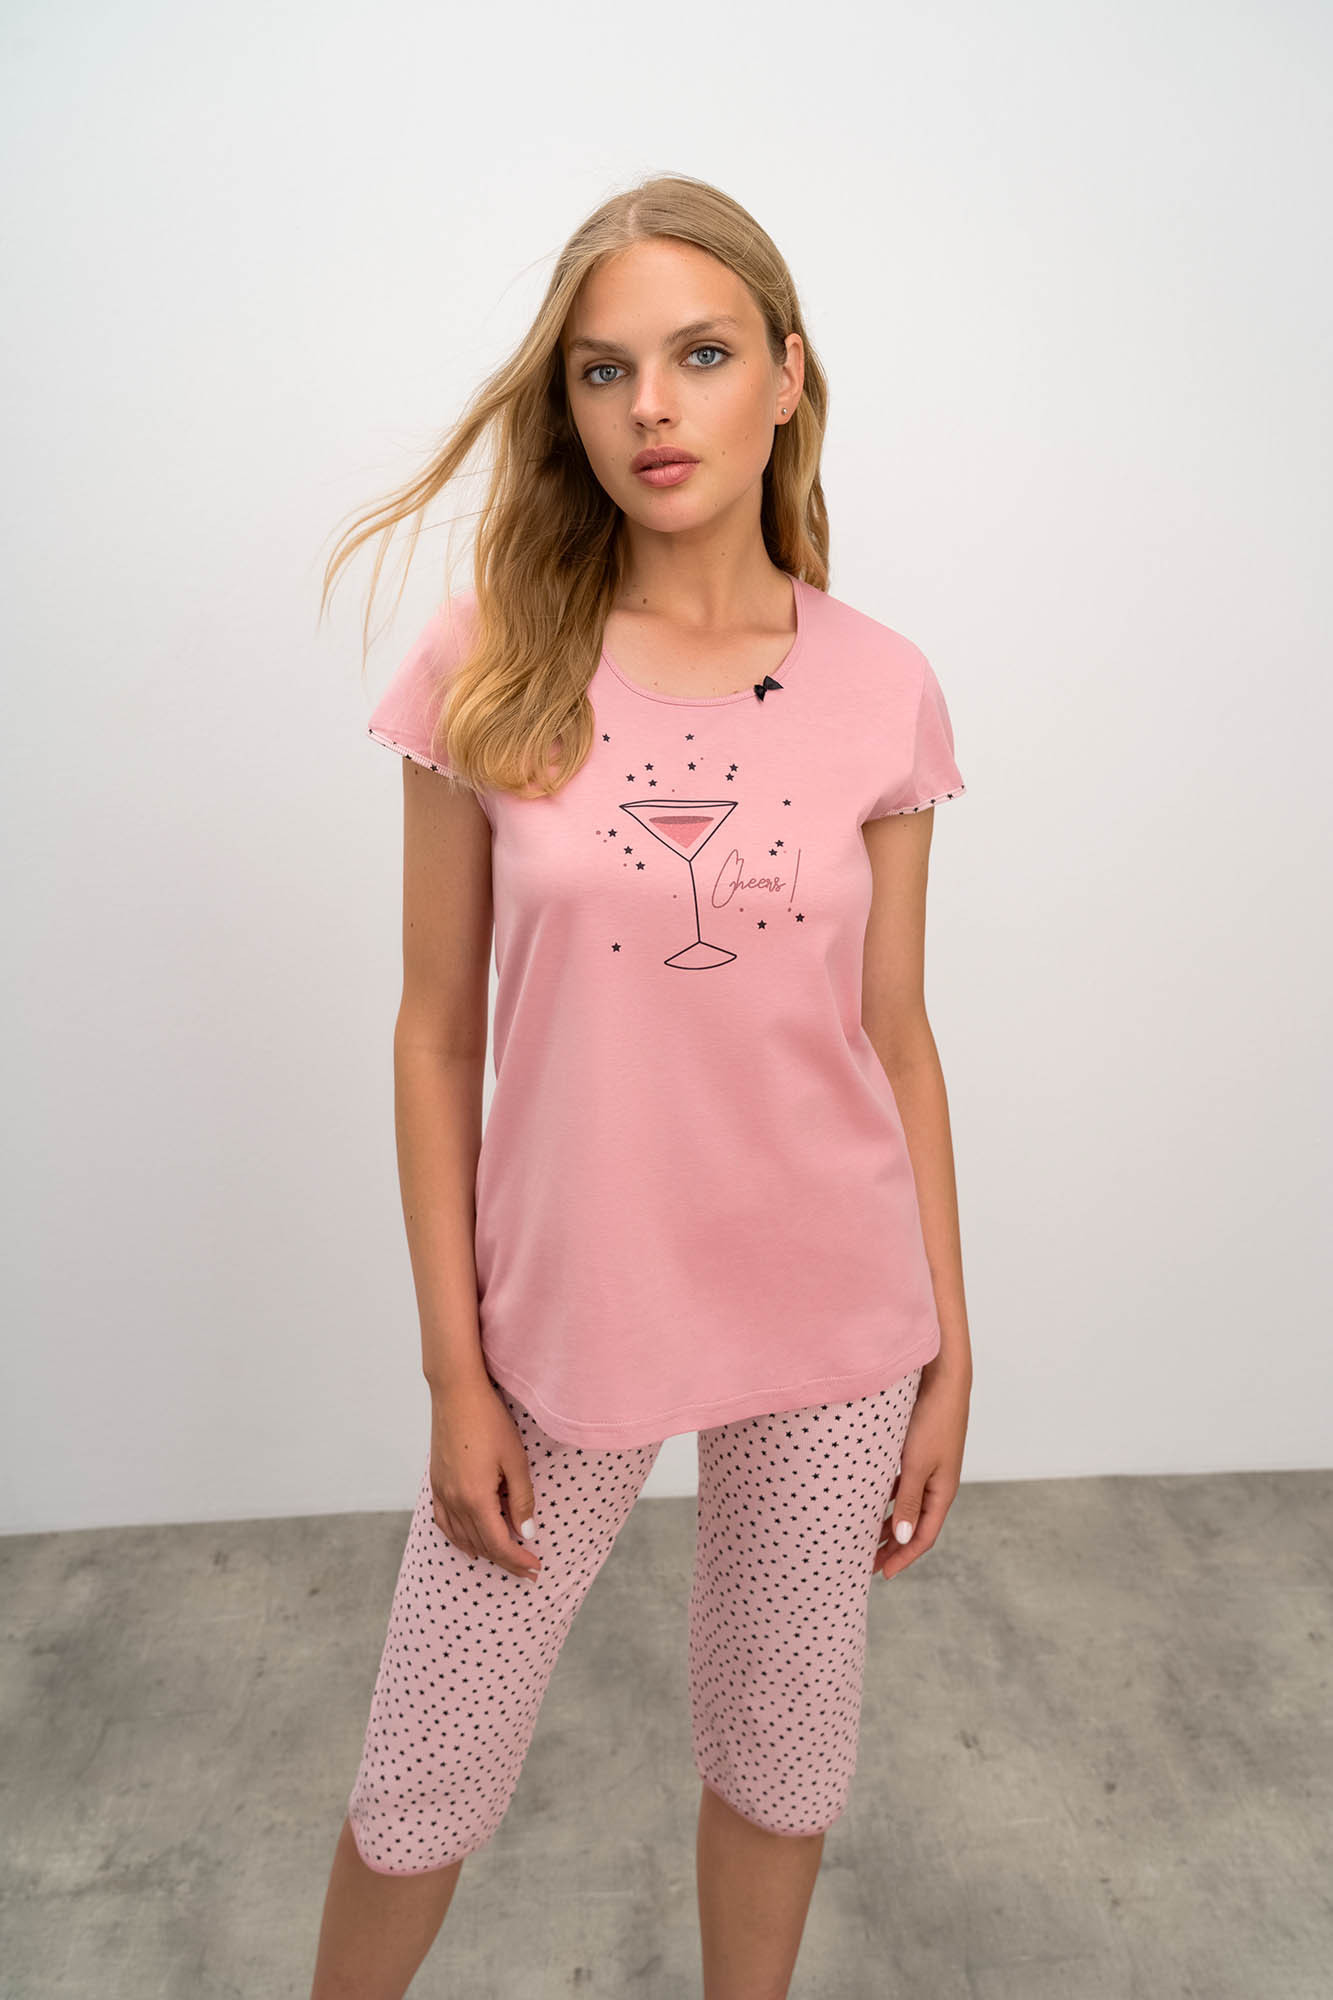 Vamp - Dvoudílné dámské pyžamo 16295 - Vamp pink gray XL